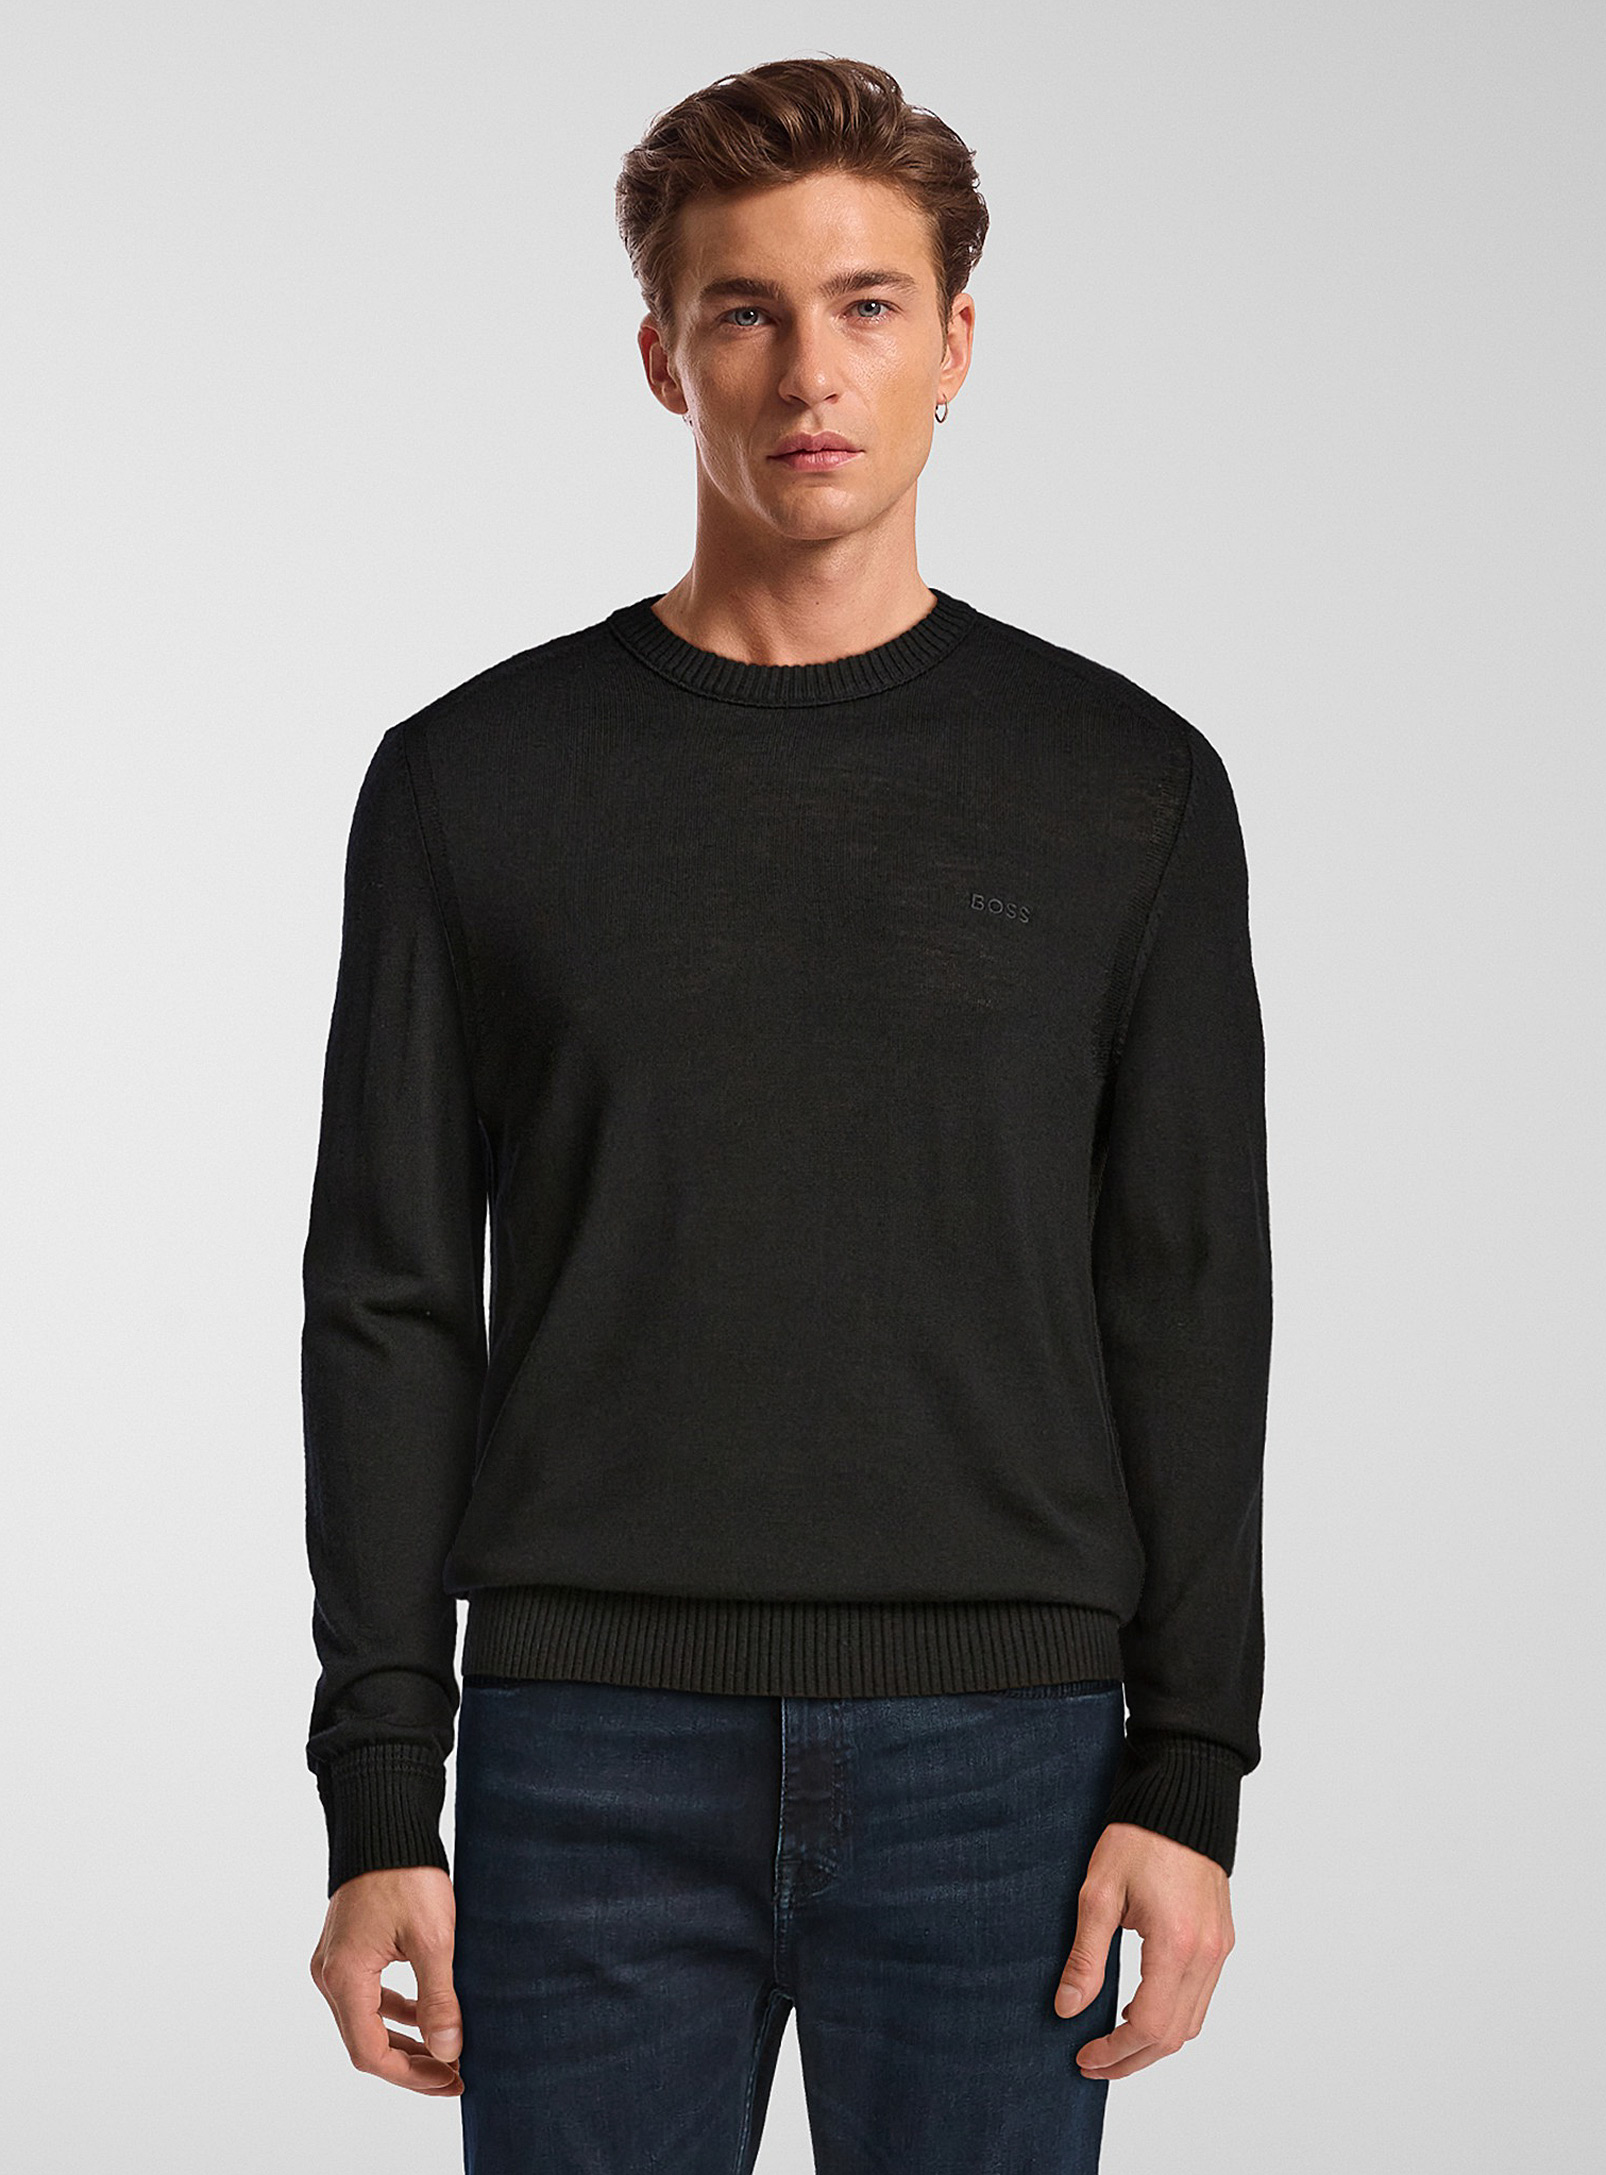 Hugo Boss Avac Minimalist Sweater In Black